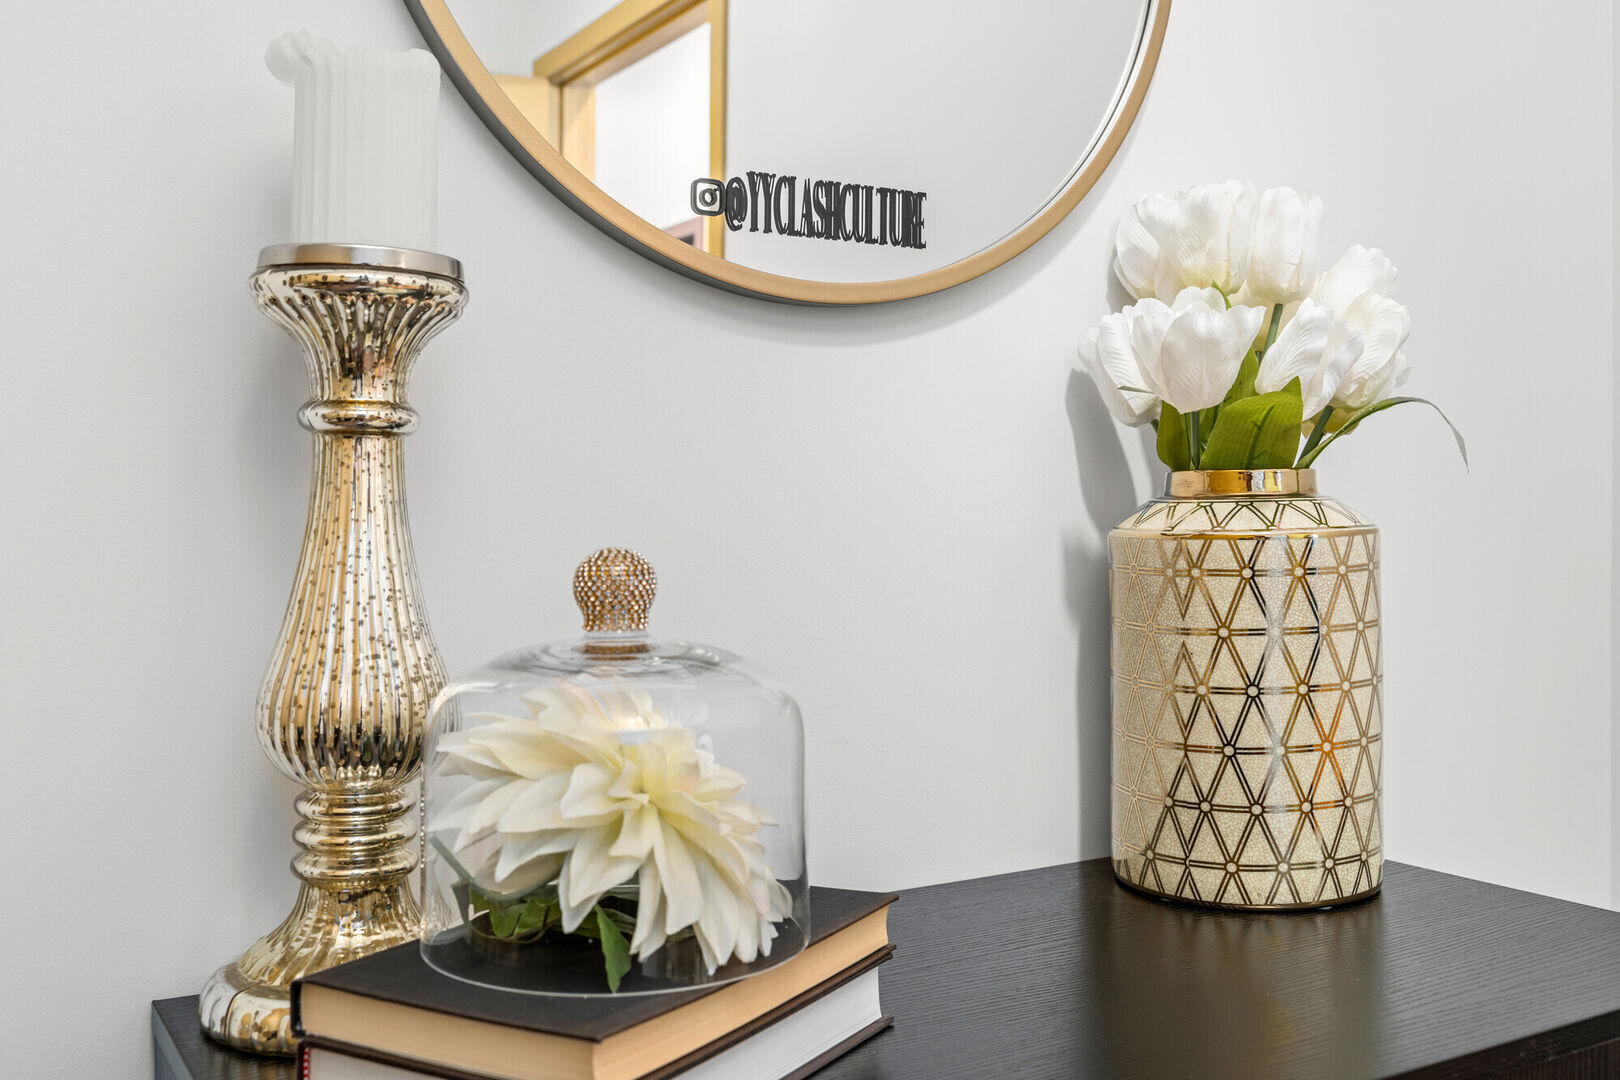 Calgary interior design lash studio modern table closeup detail vase gold flowers books